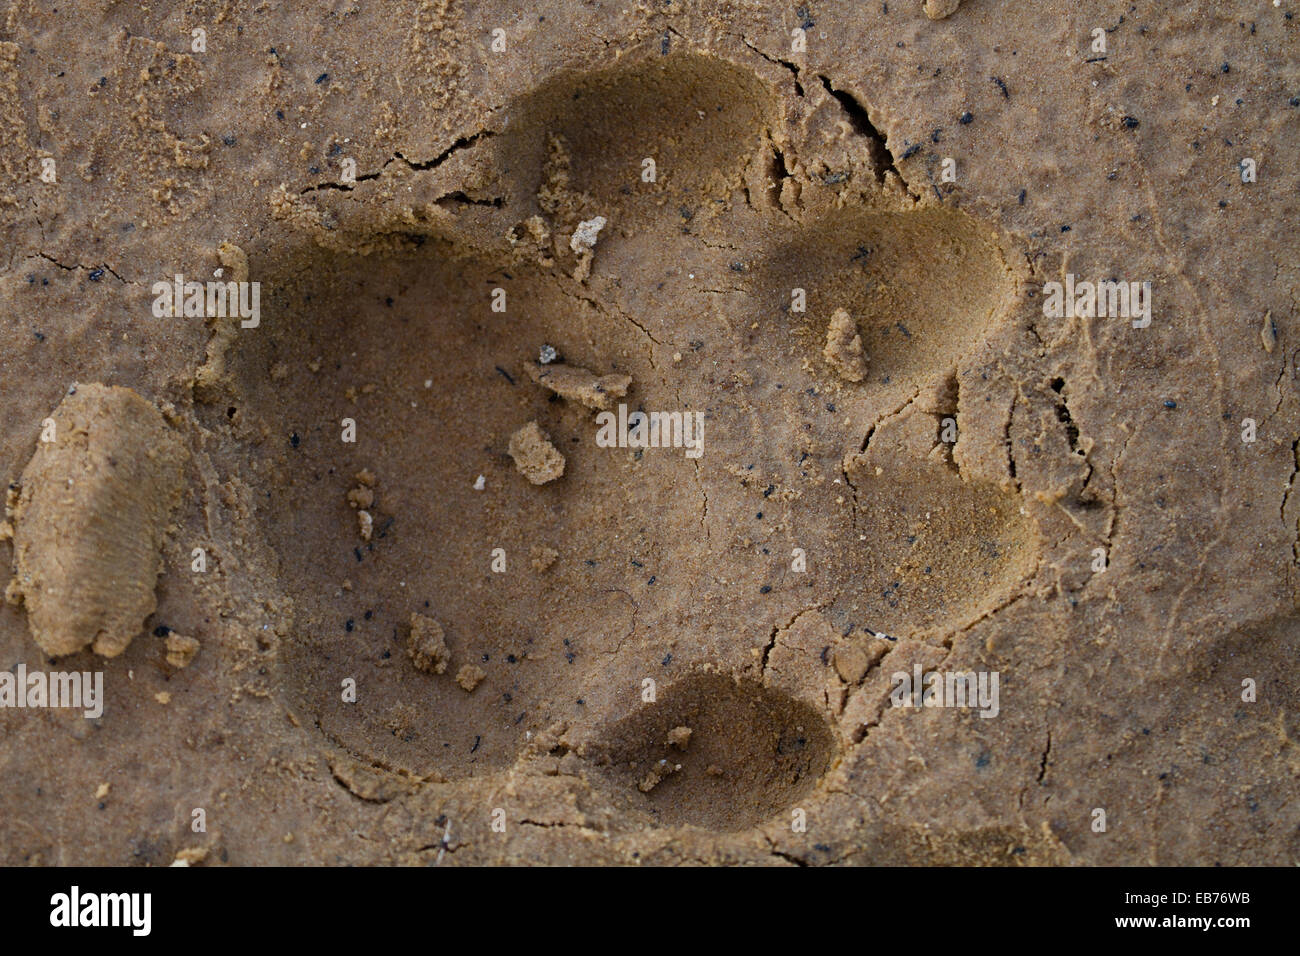 Jaguar (Panthera onca) footprint in sandy beach, Pantanal, Mato Grosso State, Brazil Stock Photo